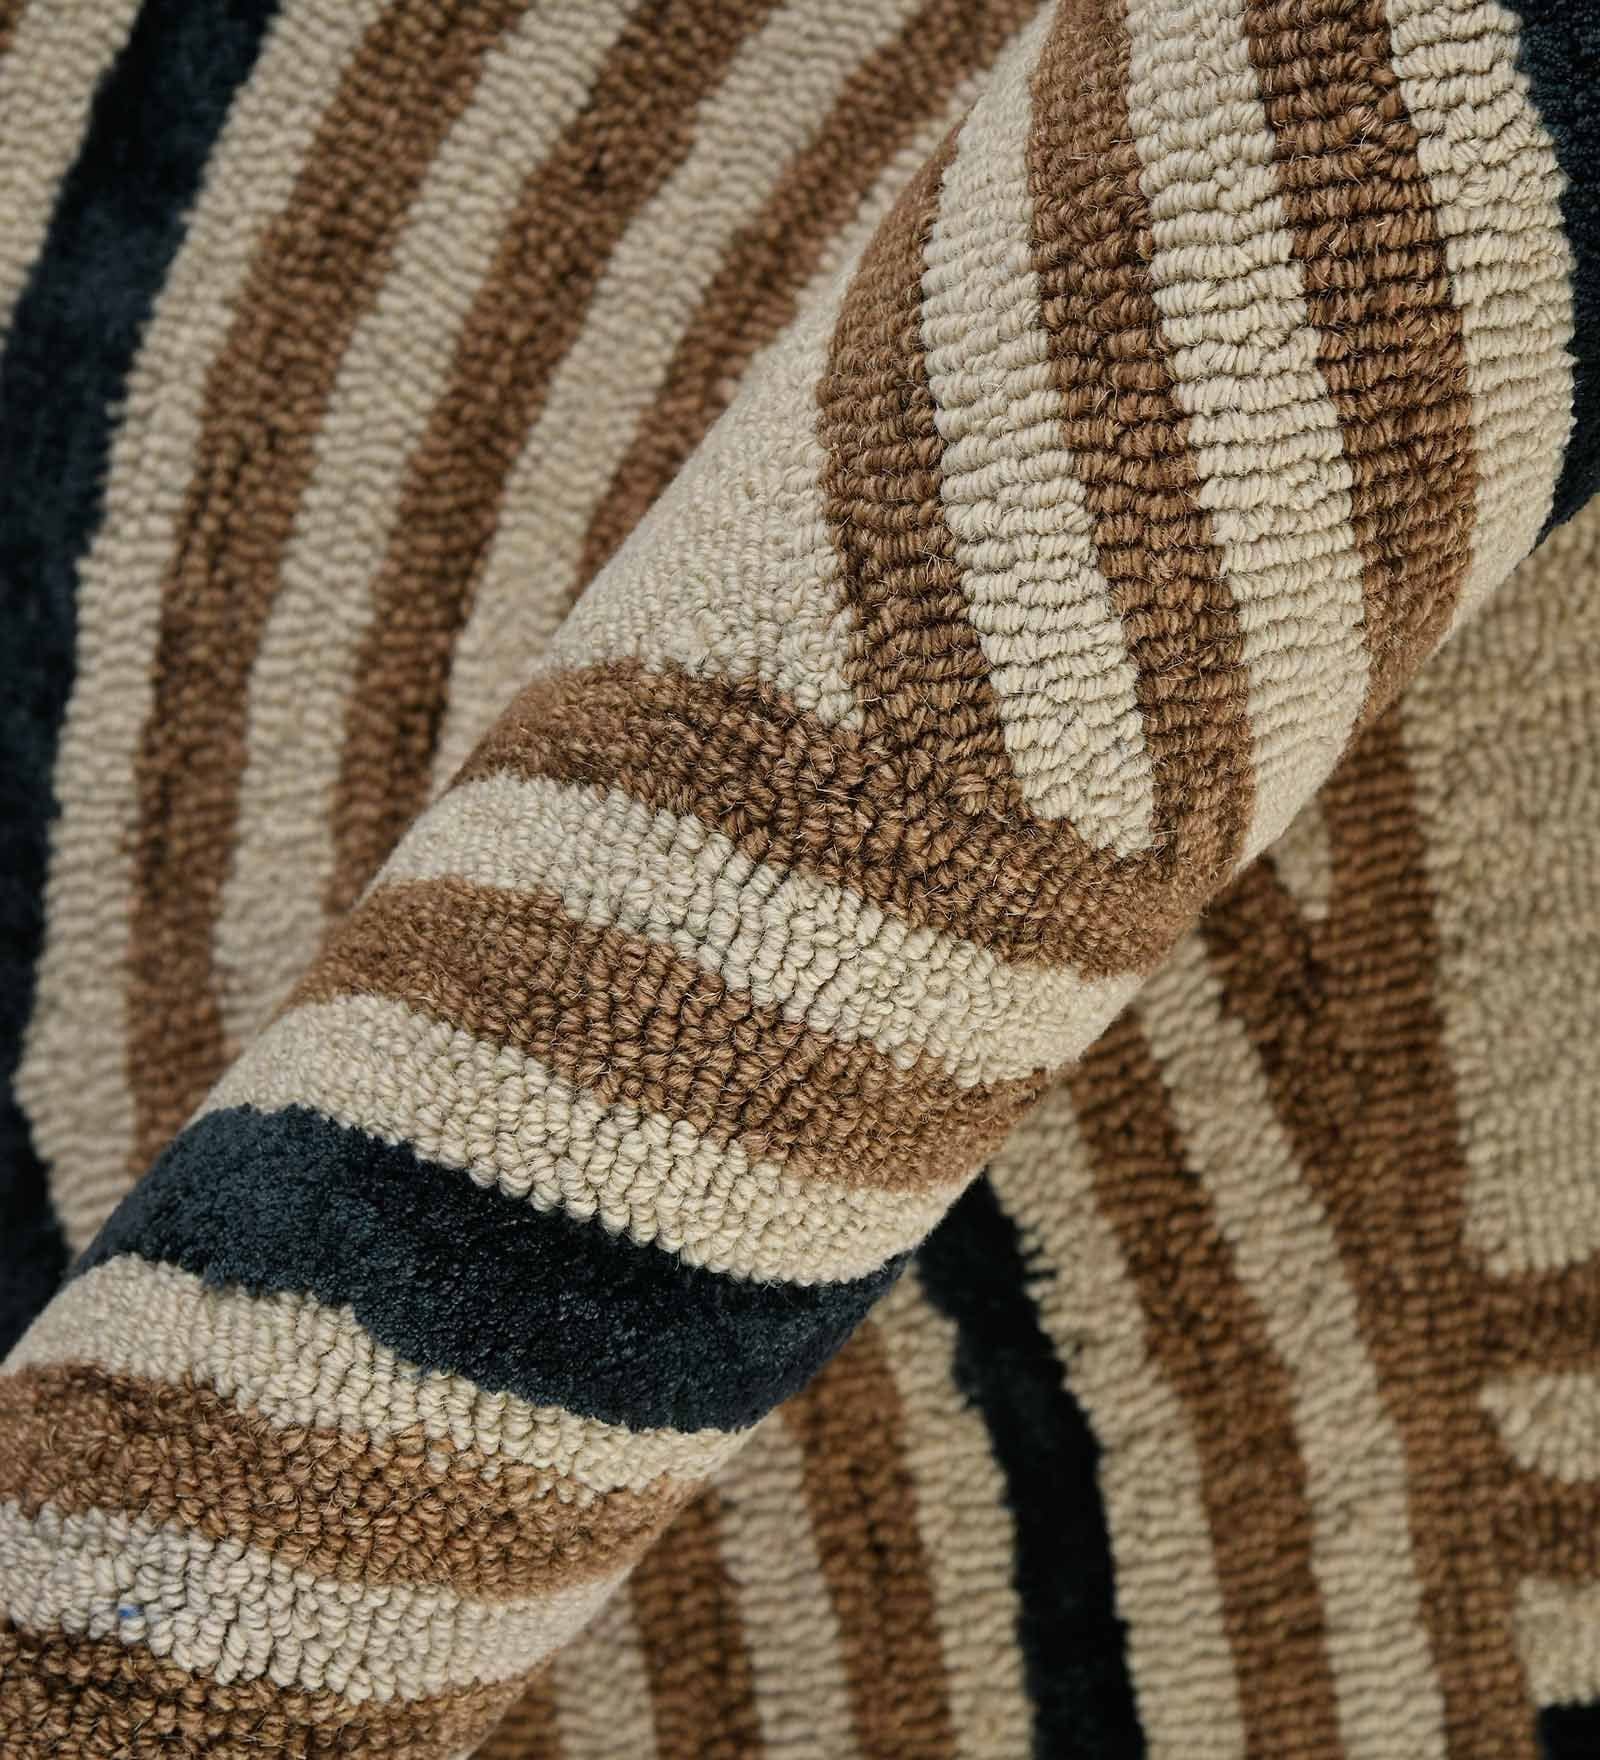 CORAL REEF Wool & Viscose Canyan 4x6 Feet  Hand-Tufted Carpet - Rug